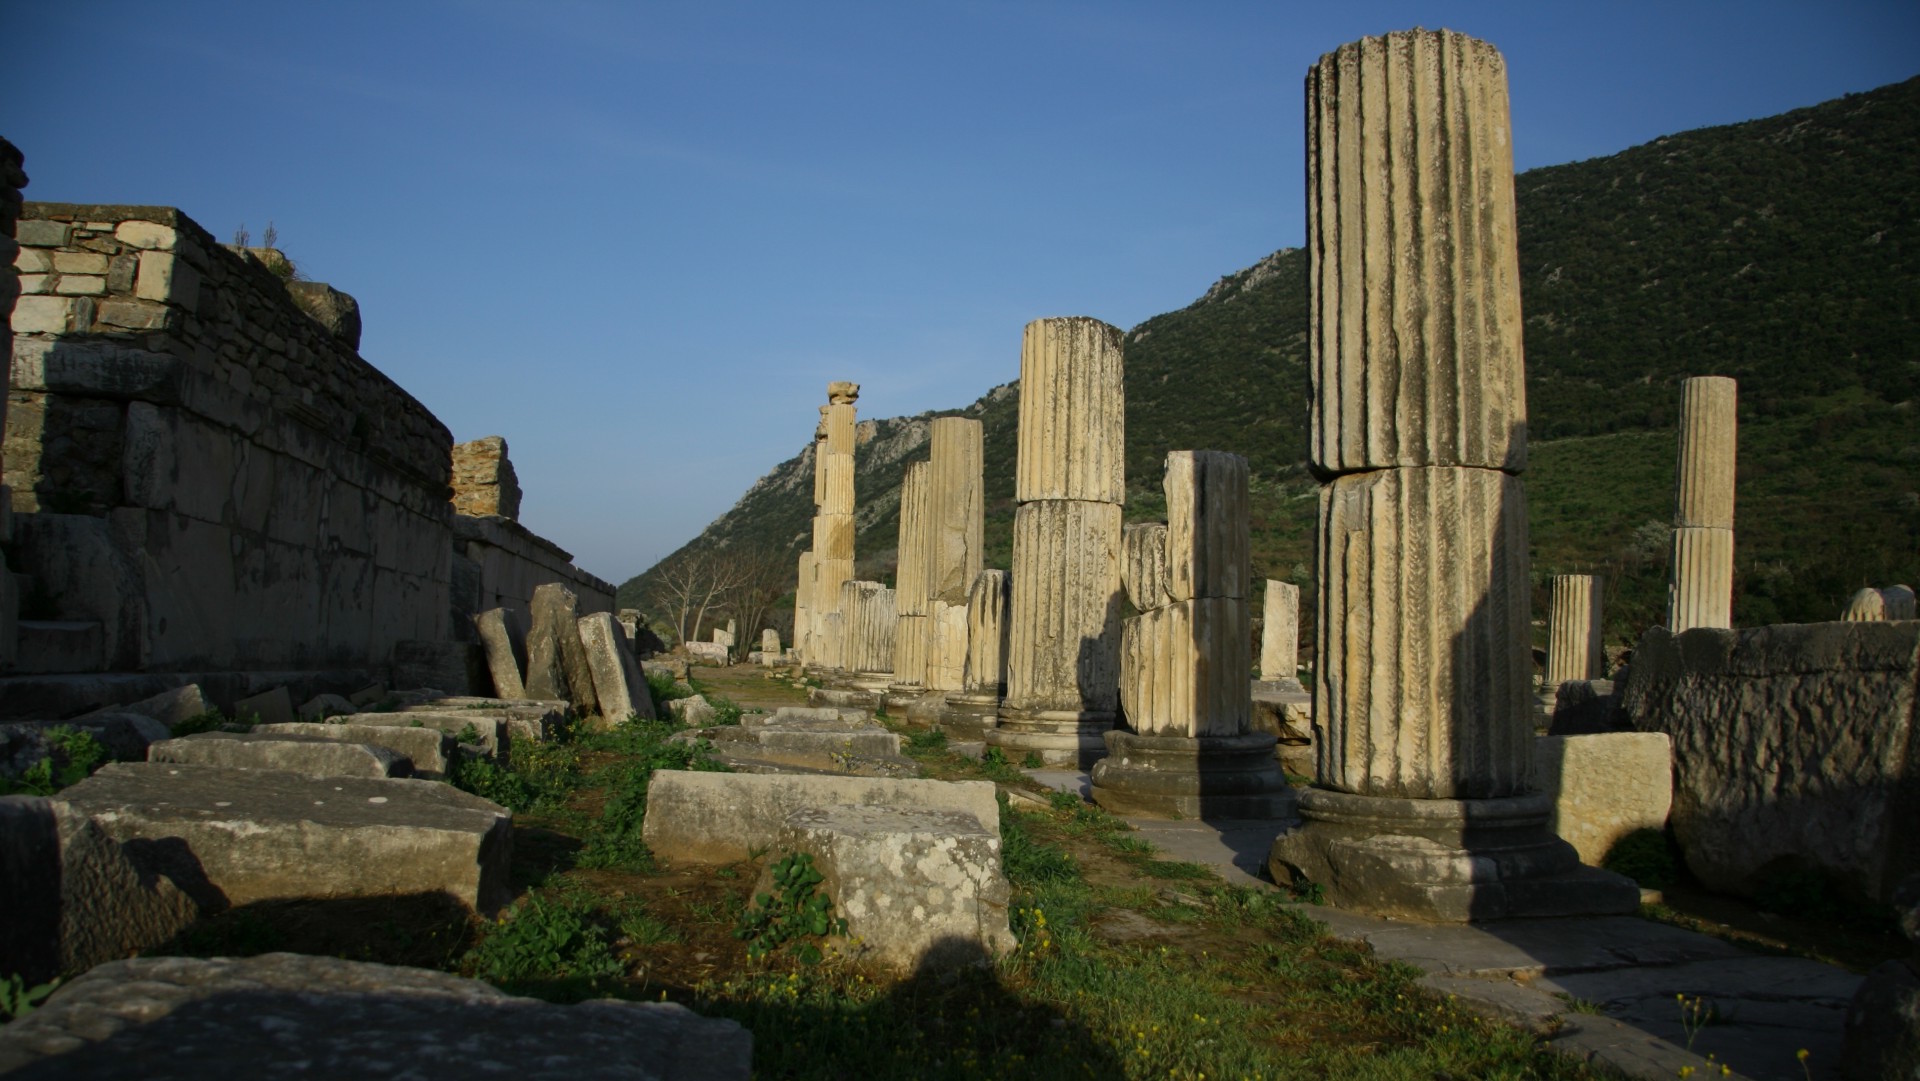 Christianity Enters Ephesus, Part 2